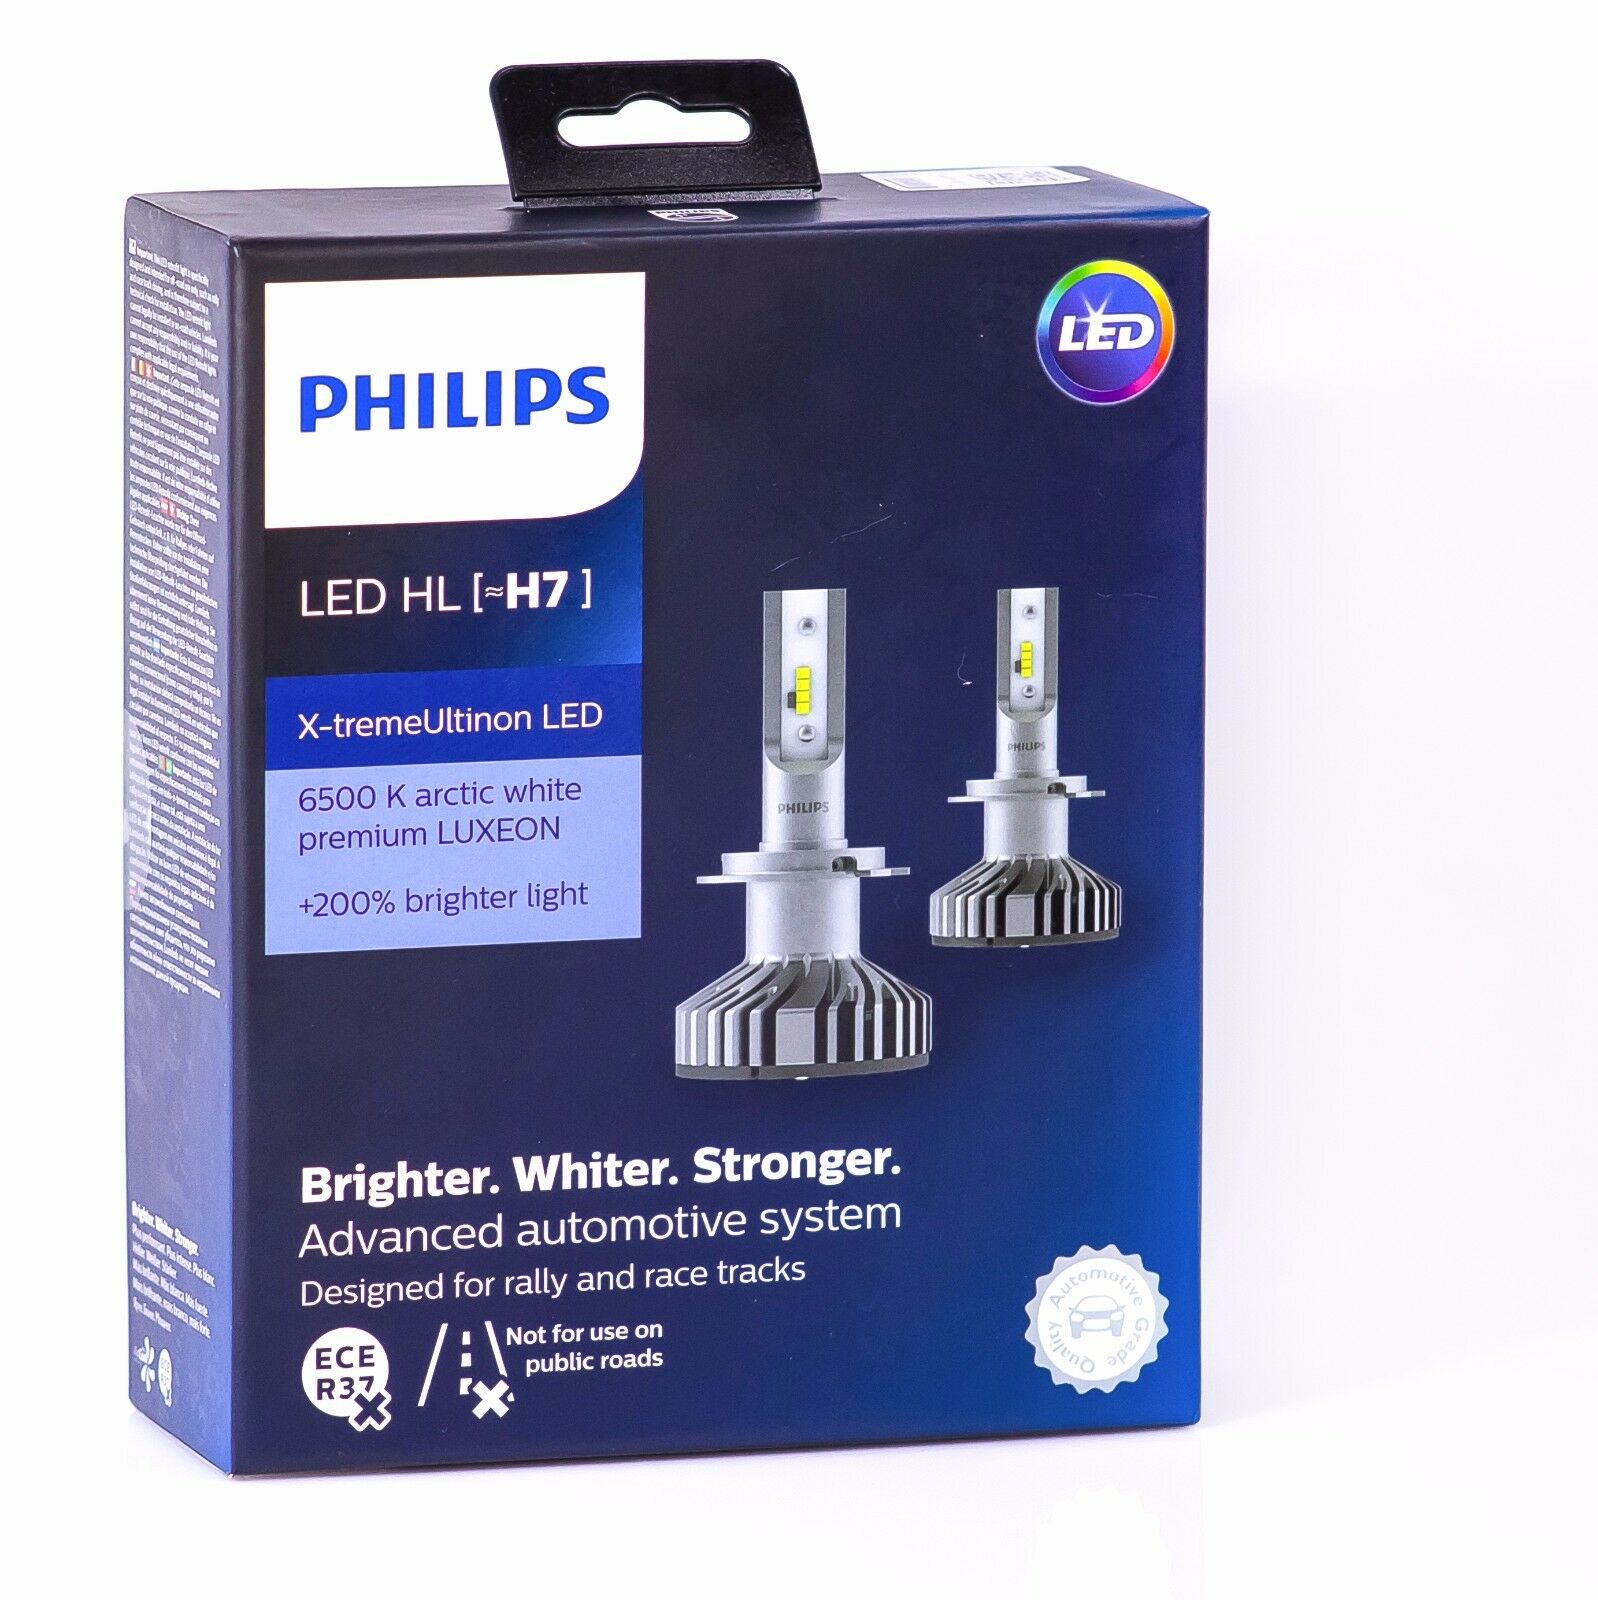 Philips h7 купить. Led лампы Philips x-treme Ultinon h7. Led лампы Филипс h7. Philips Essential led h7 Kia. Филипс лед h7 4000.